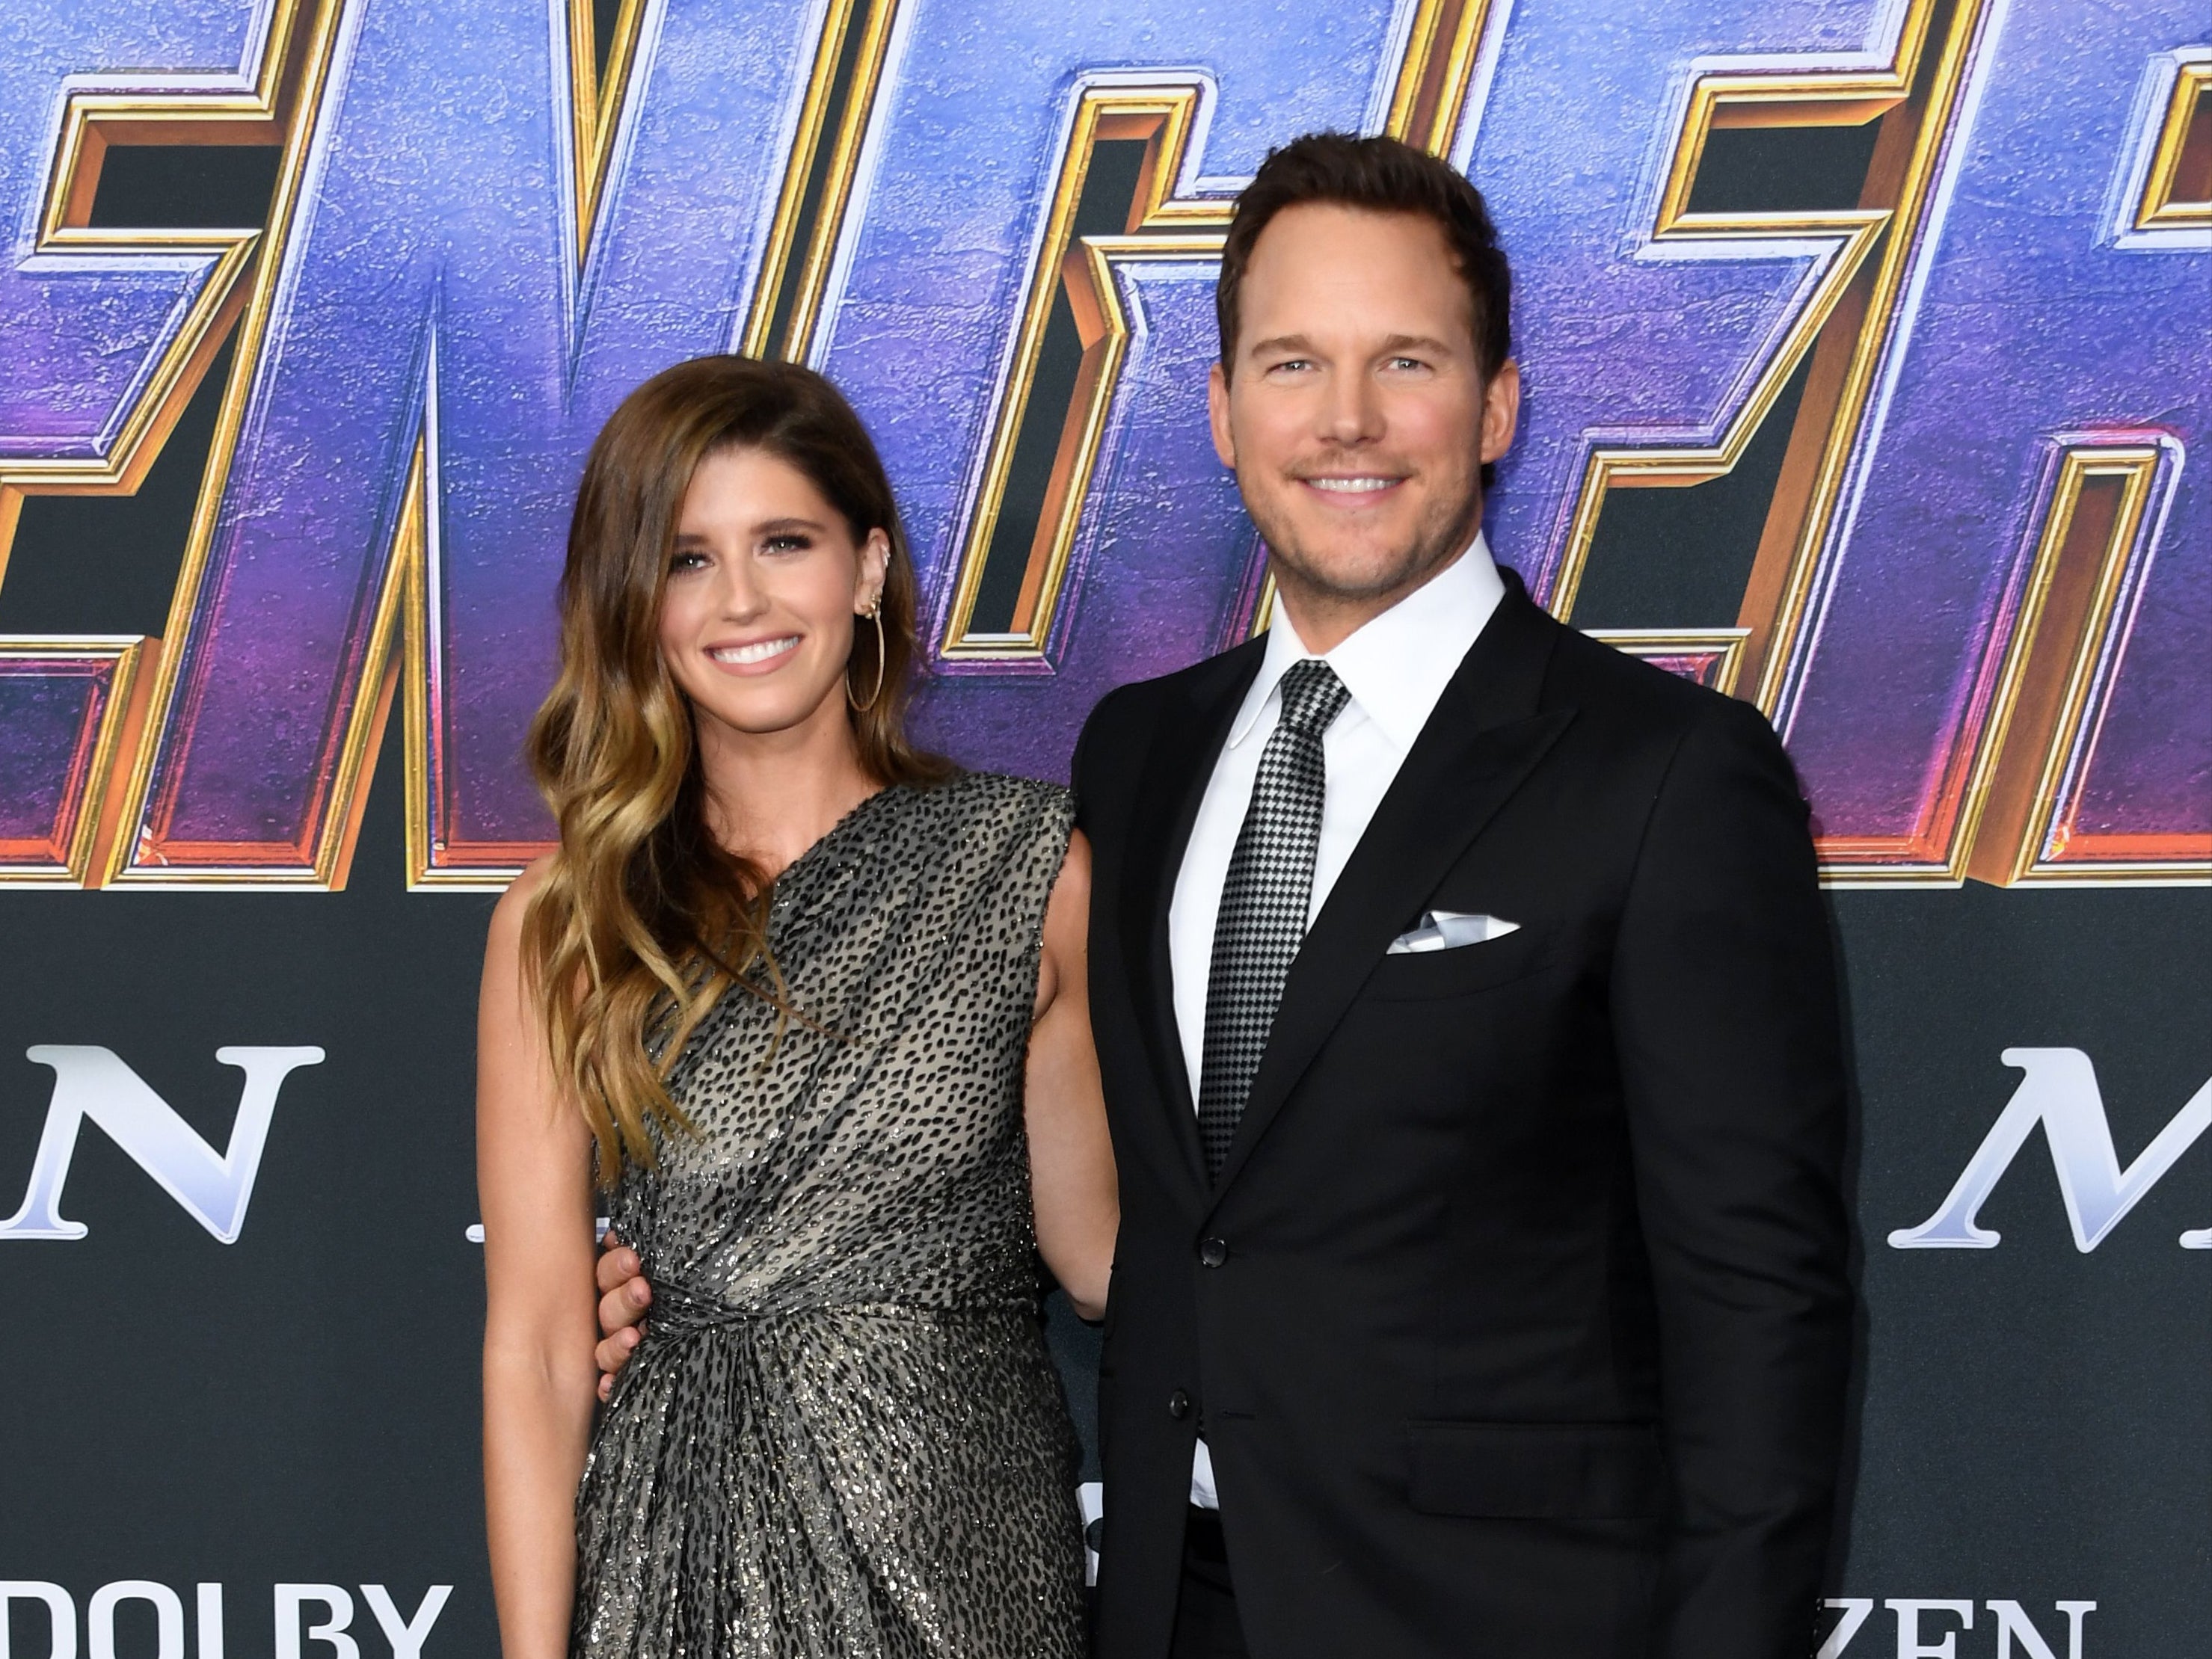 Chris Pratt and Katherine Schwarzenegger reportedly expecting second child